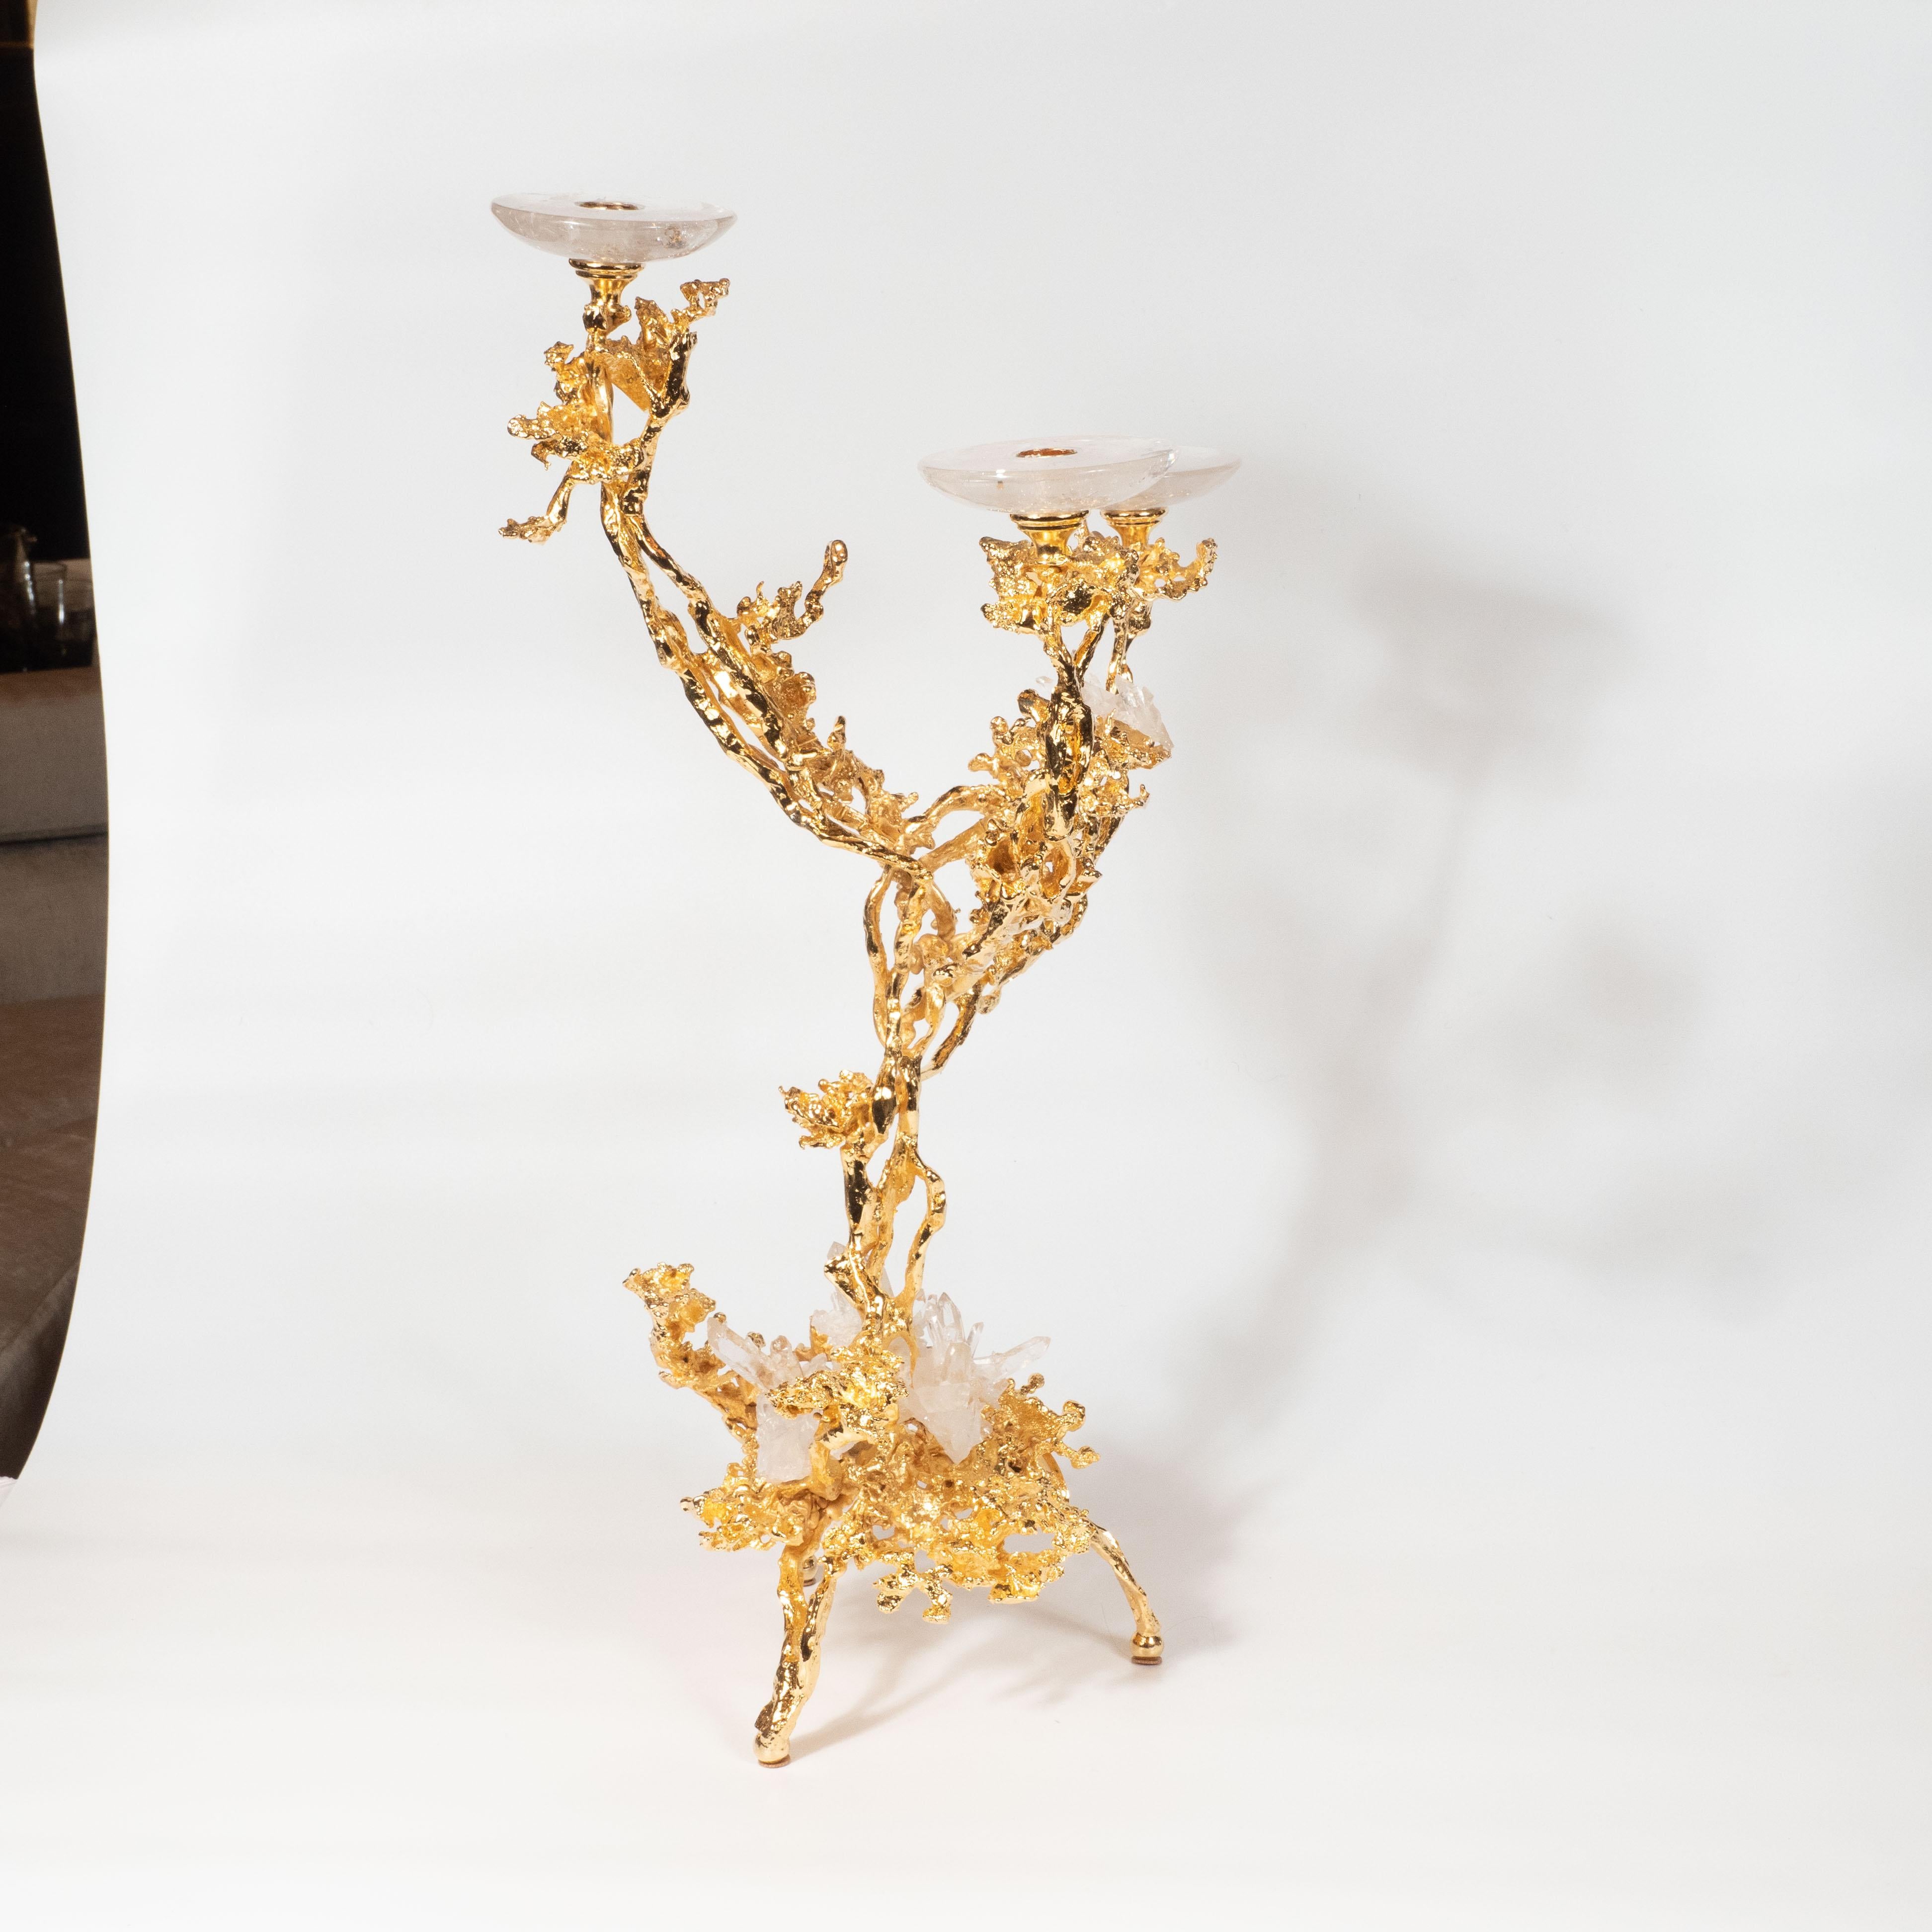 24-Karat Gold Triple Branch Candlesticks with Rock Crystals, Claude Boeltz, Pair For Sale 4